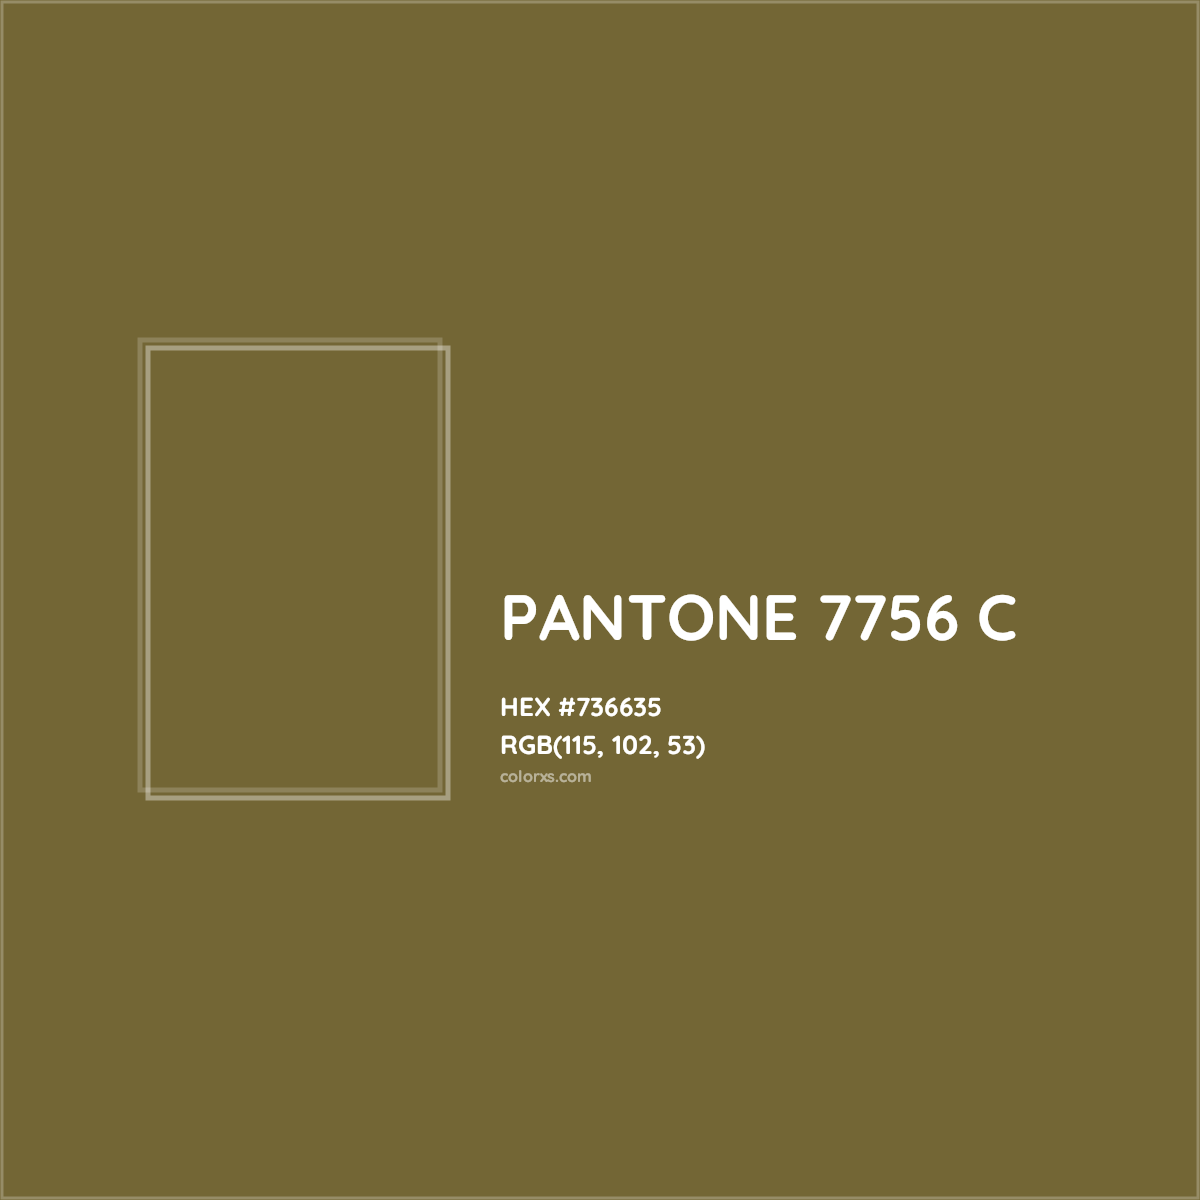 HEX #736635 PANTONE 7756 C CMS Pantone PMS - Color Code